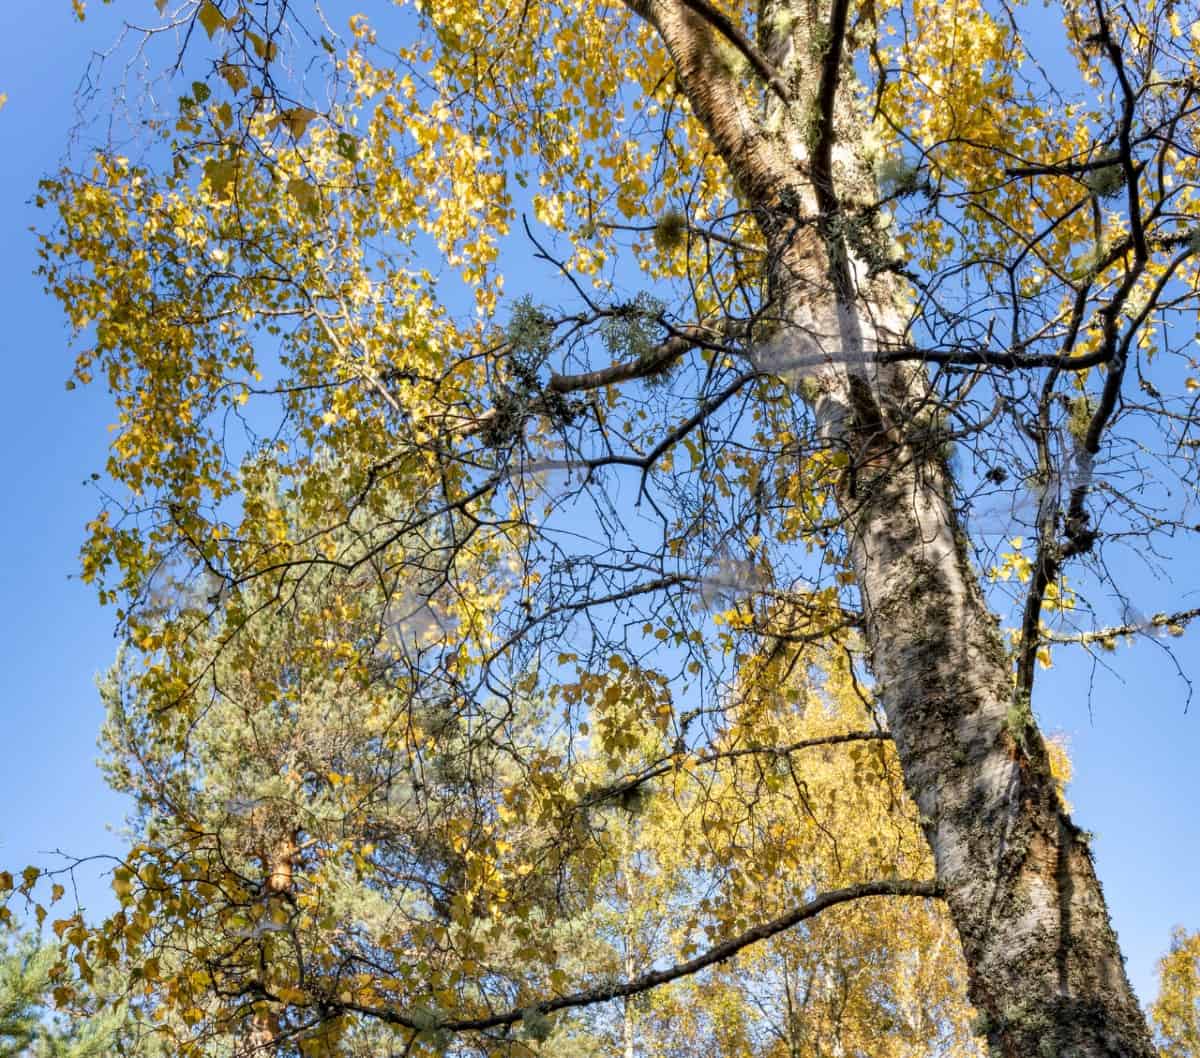 Birch trees have unusual peeling bark.